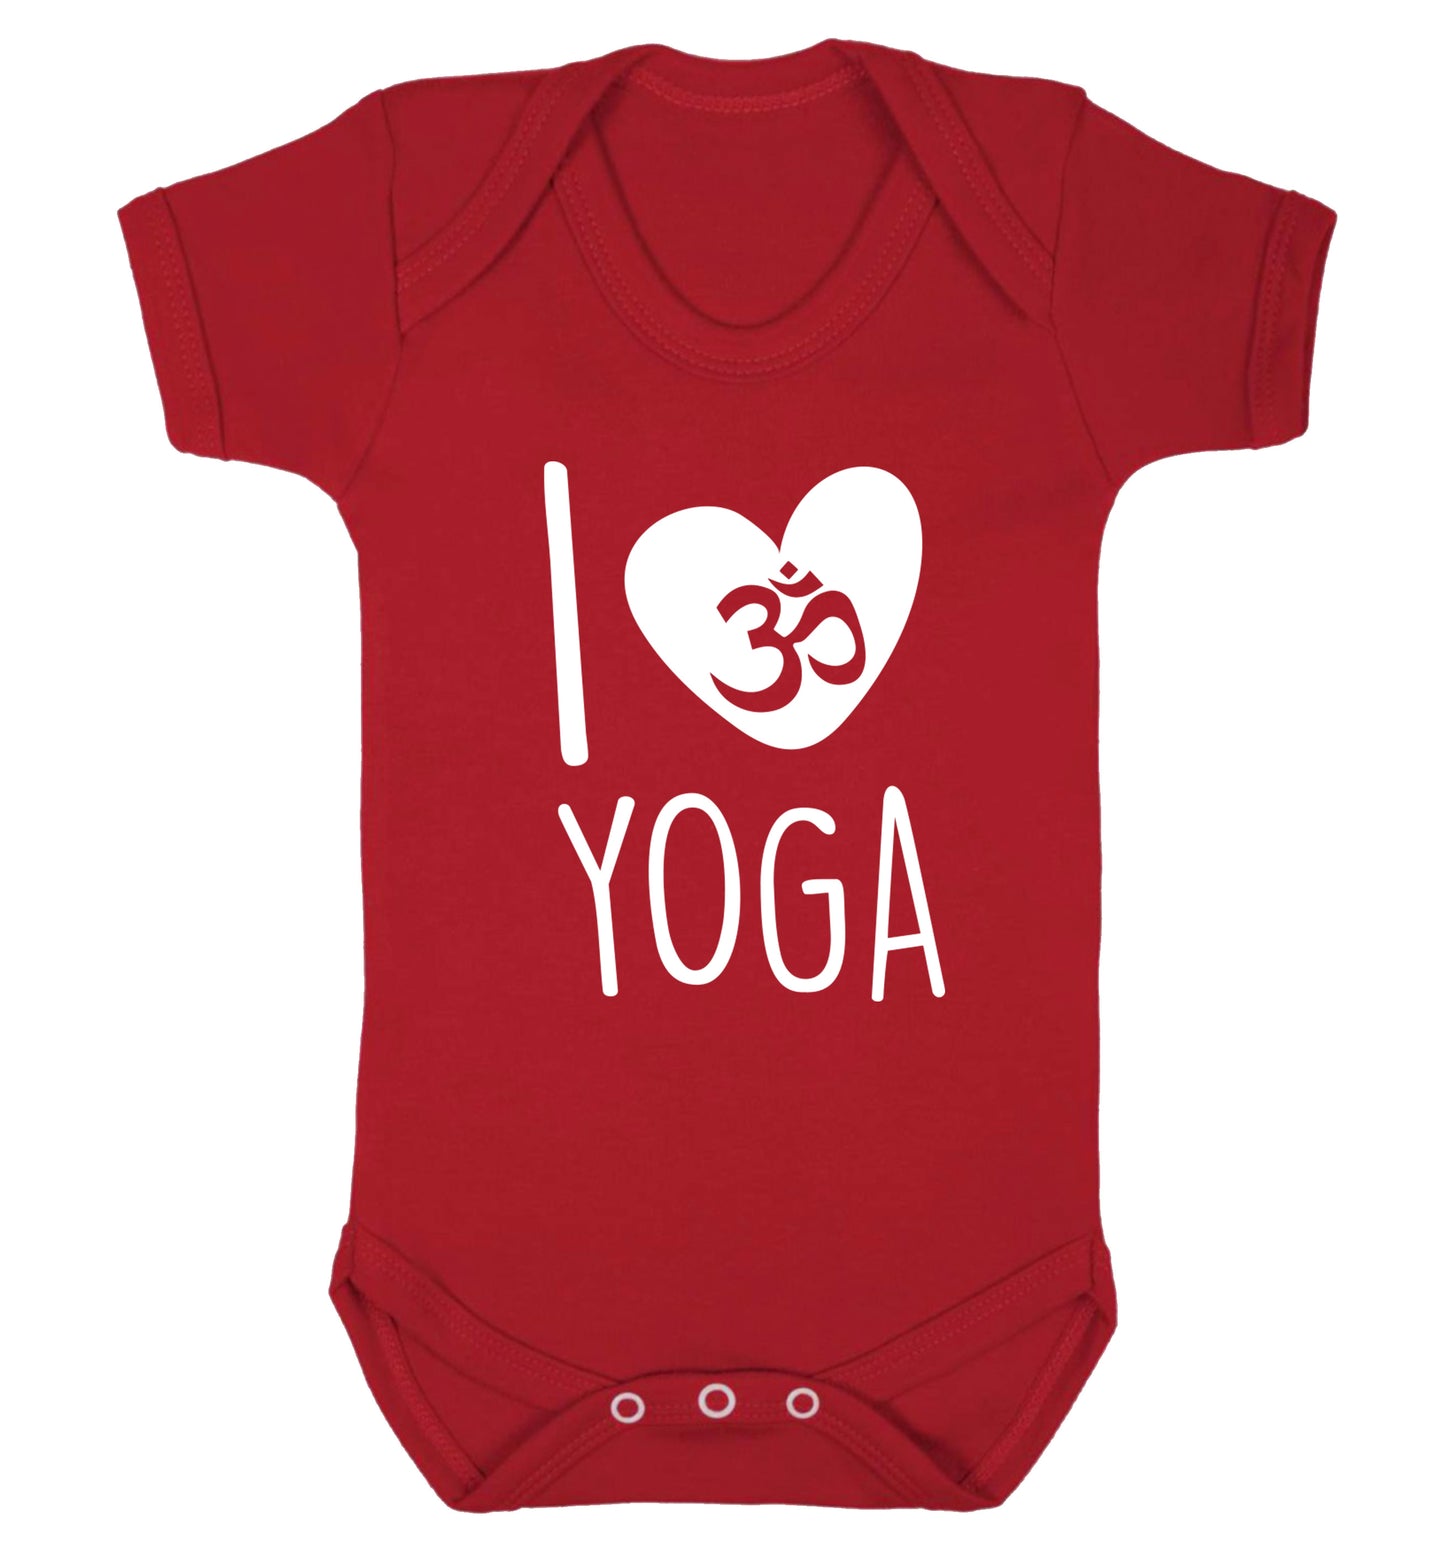 I love yoga Baby Vest red 18-24 months